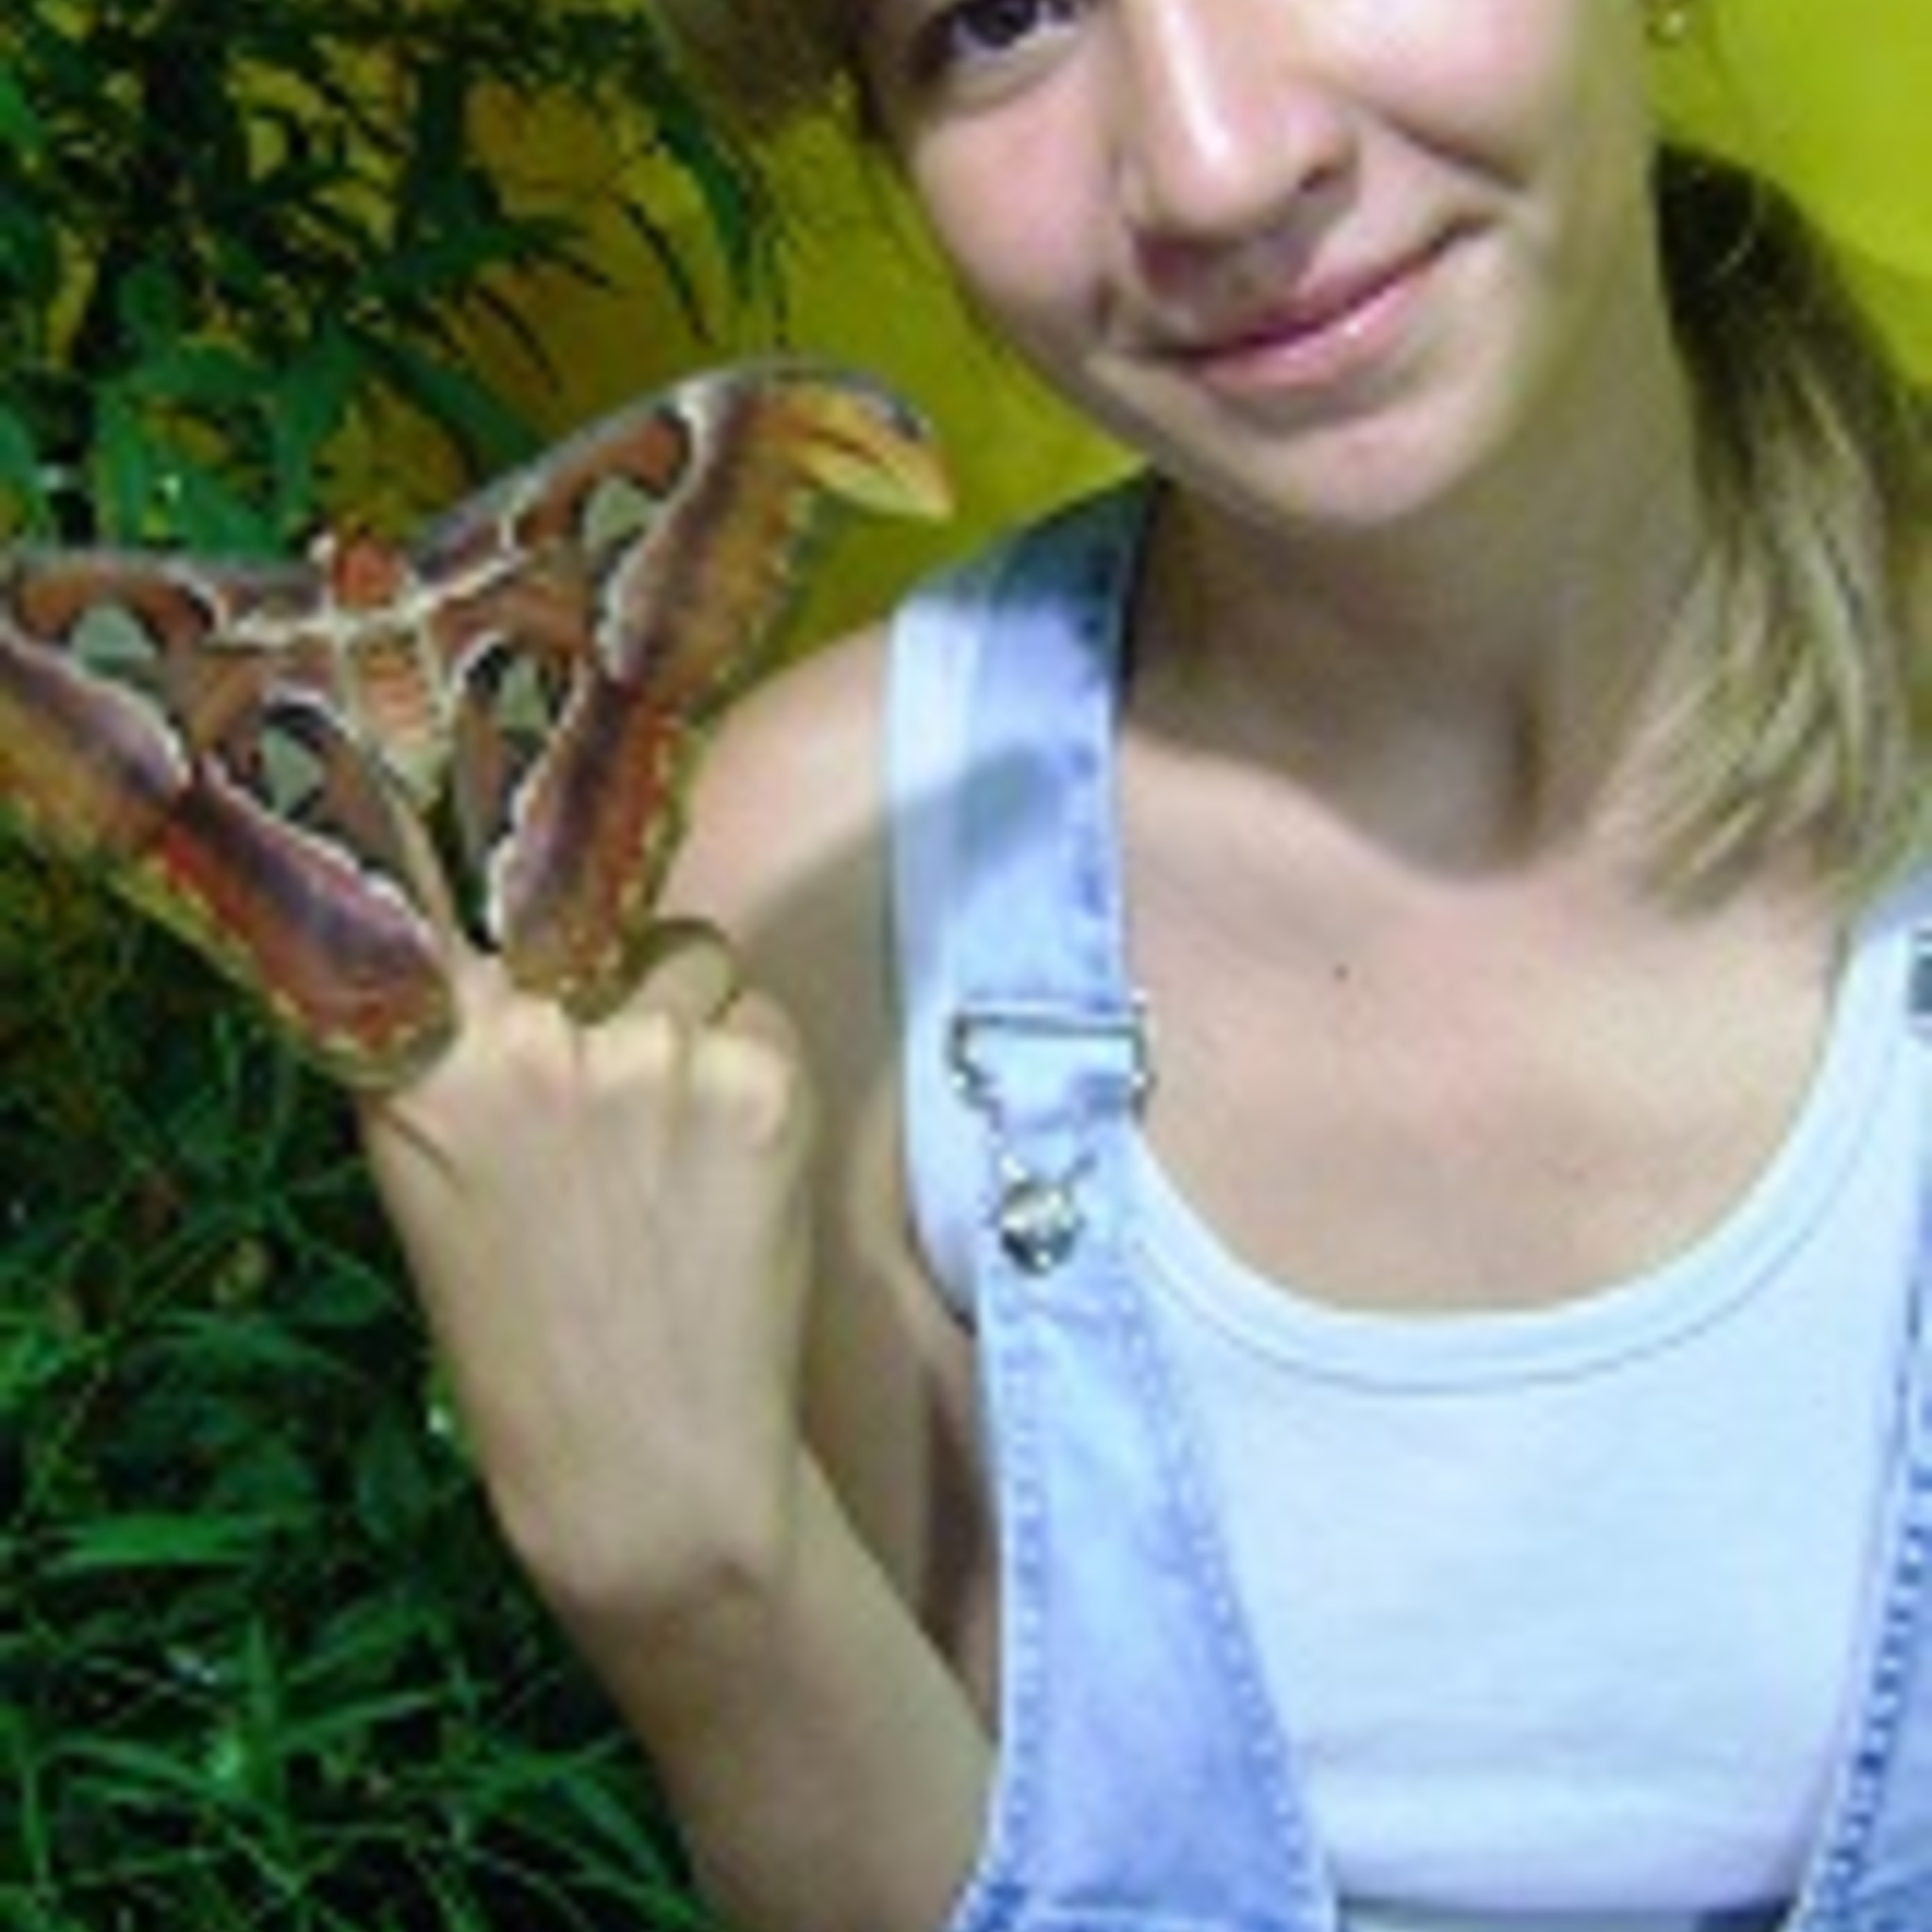 The exhibition Garden of live tropical butterflies